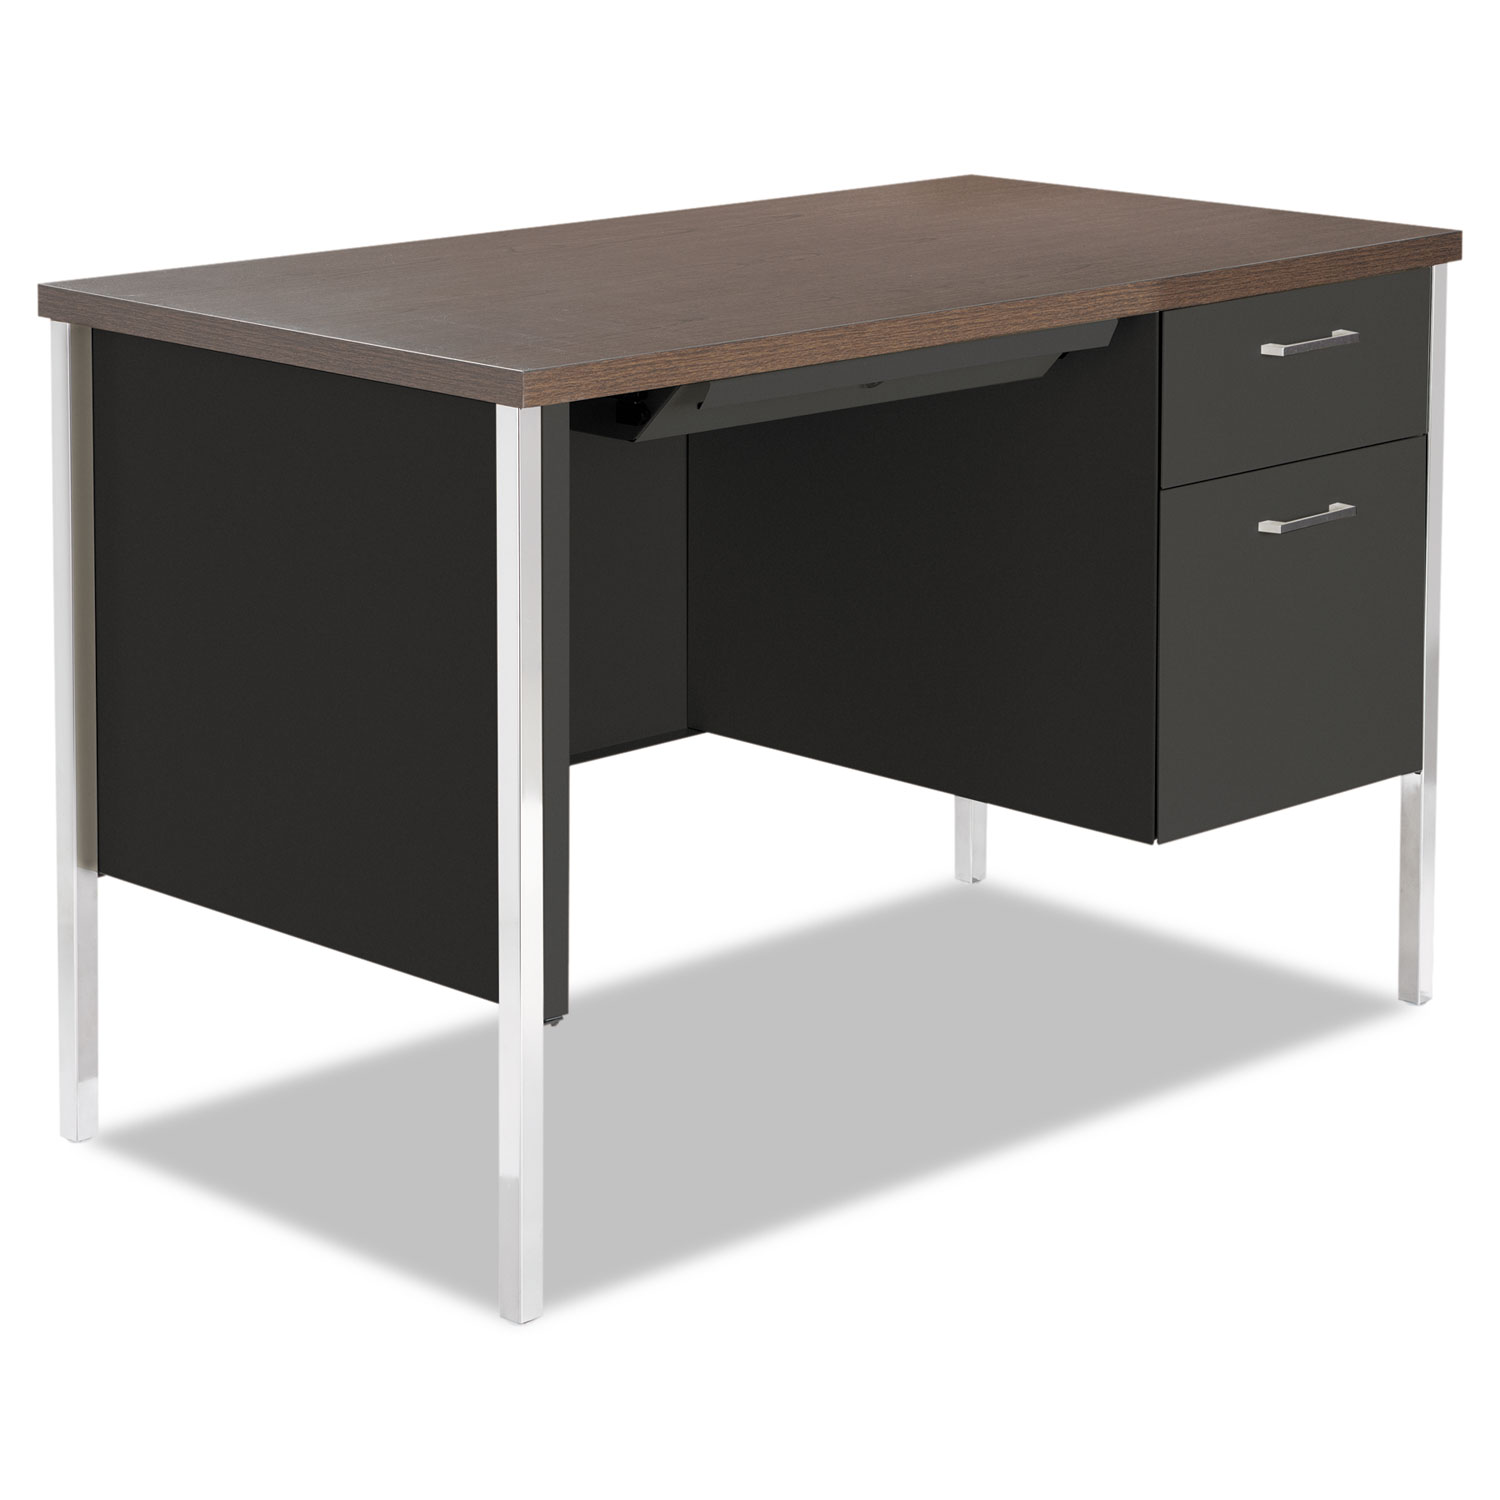  Alera ALESD4524BM Single Pedestal Steel Desk, Metal Desk, 45.25w x 24d x 29.5h, Mocha/Black (ALESD4524BM) 